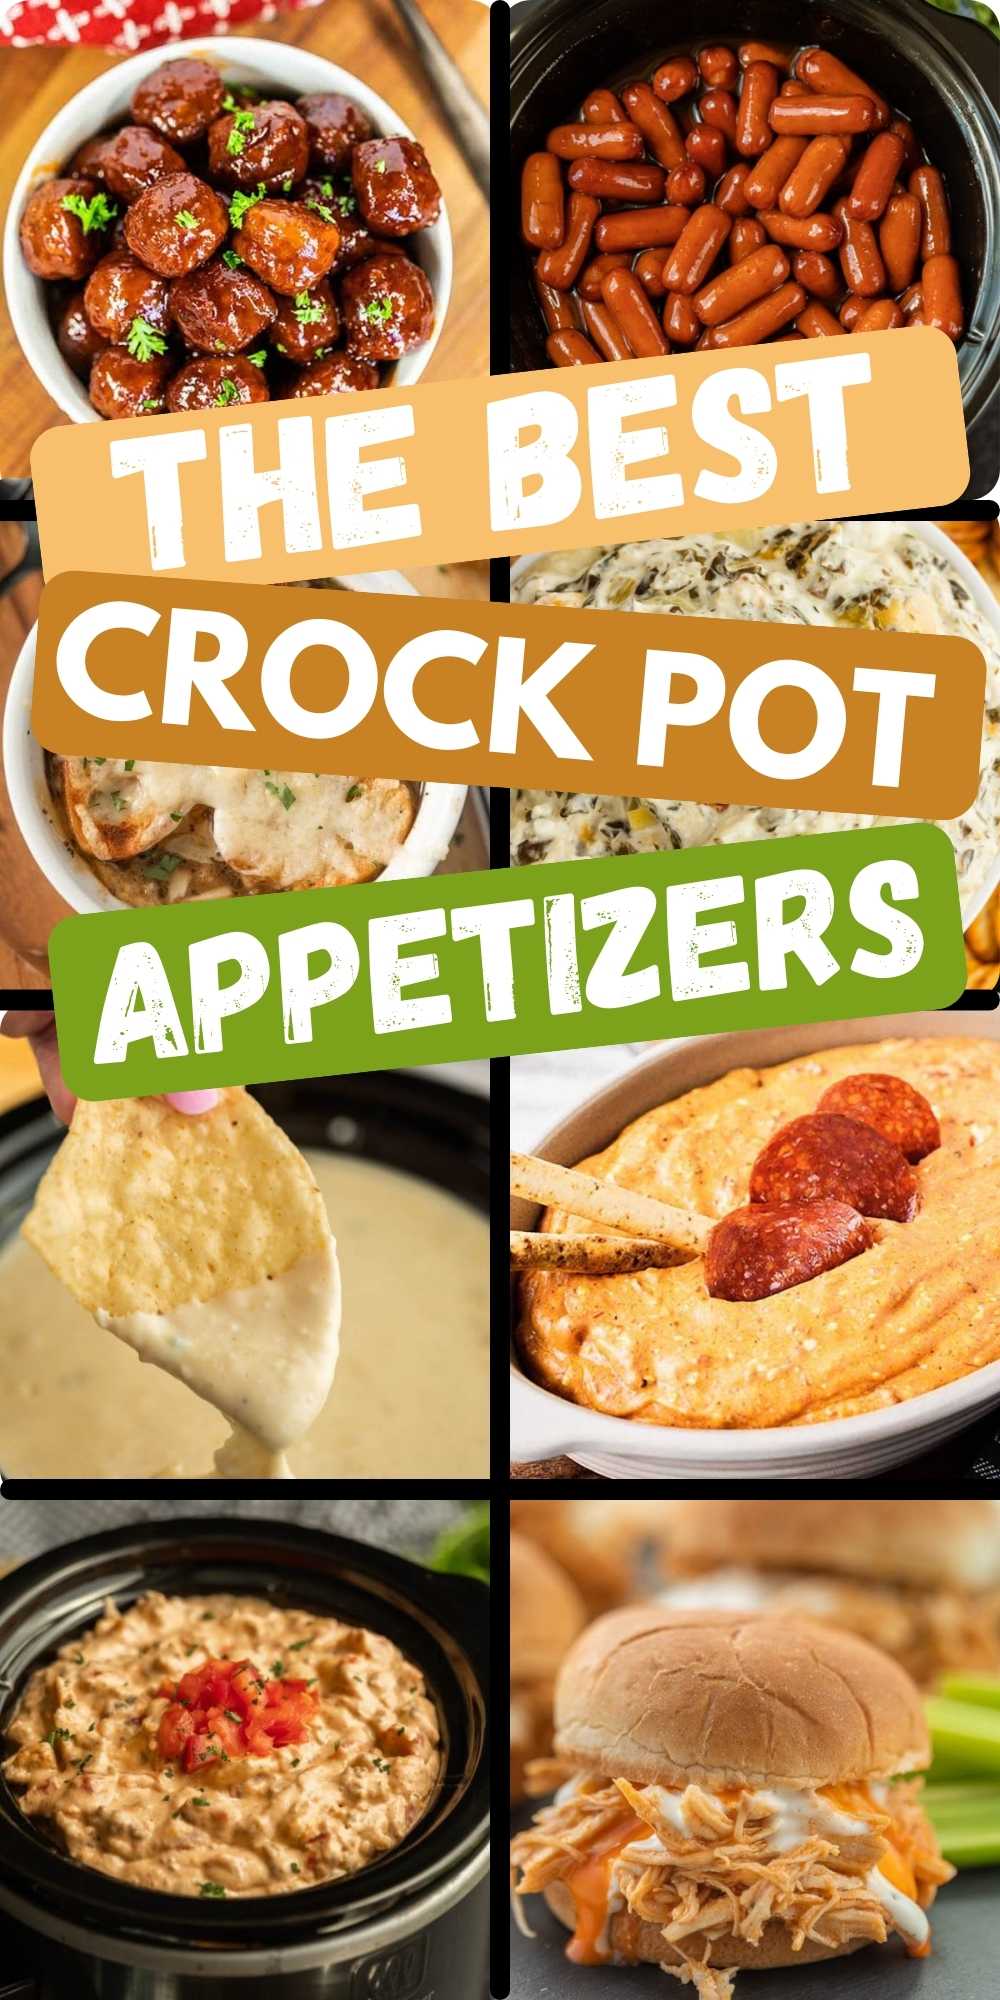 https://www.eatingonadime.com/wp-content/uploads/2022/07/Crock-Pot-Appetizers-Pin-2.jpg